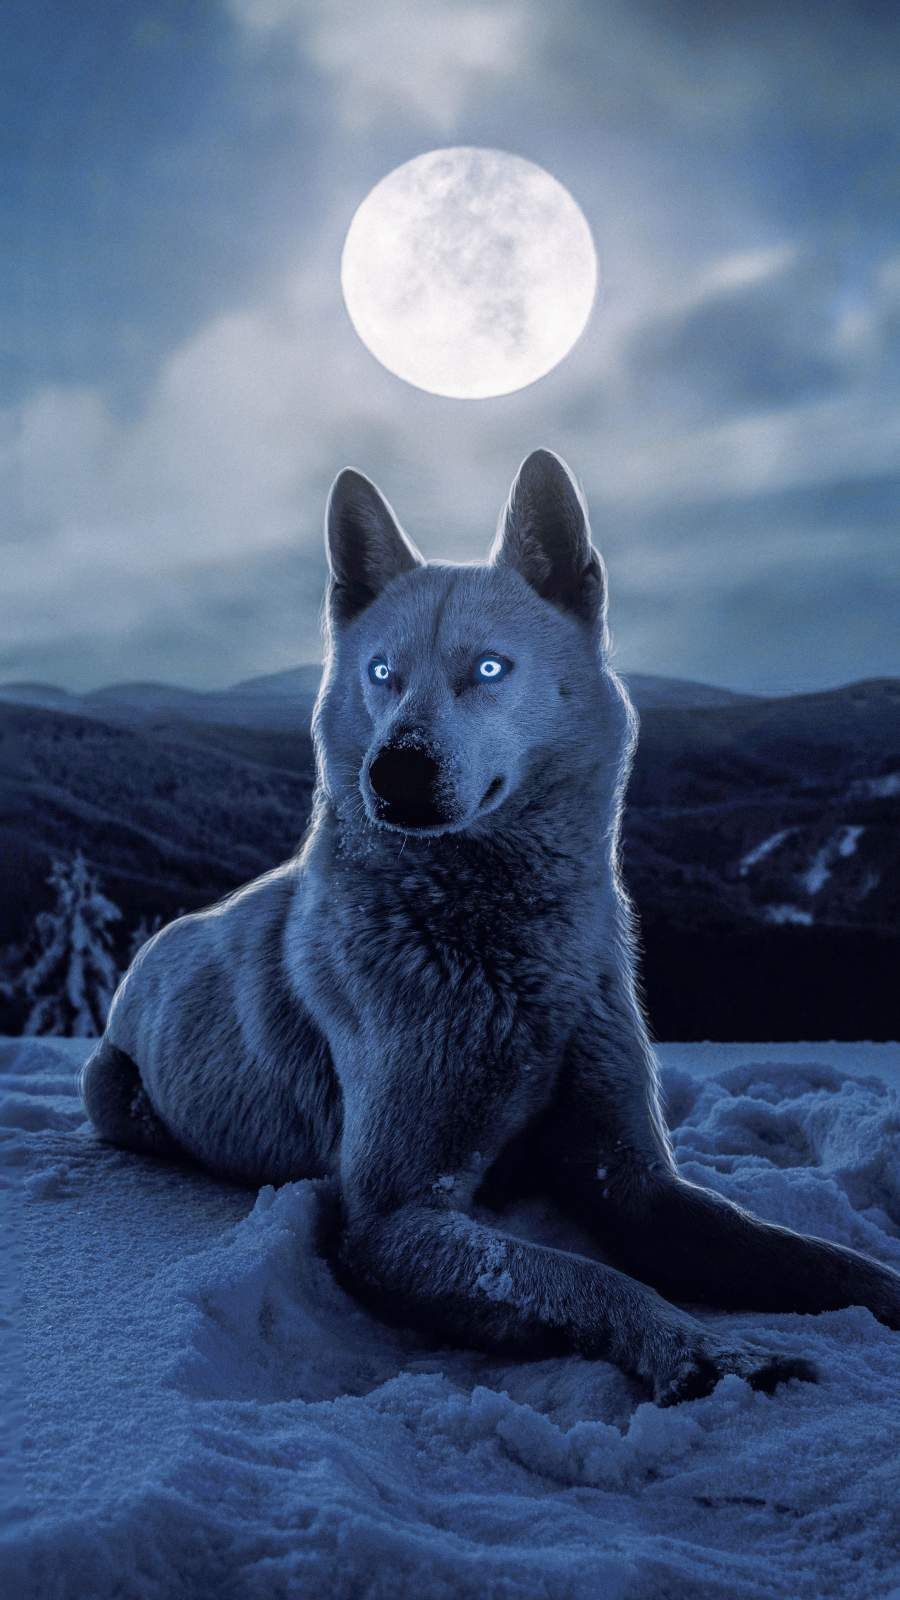 White Wolf iPhone Wallpaper. Olhos de lobo, Imagens de animais selvagens, Imagens de animais